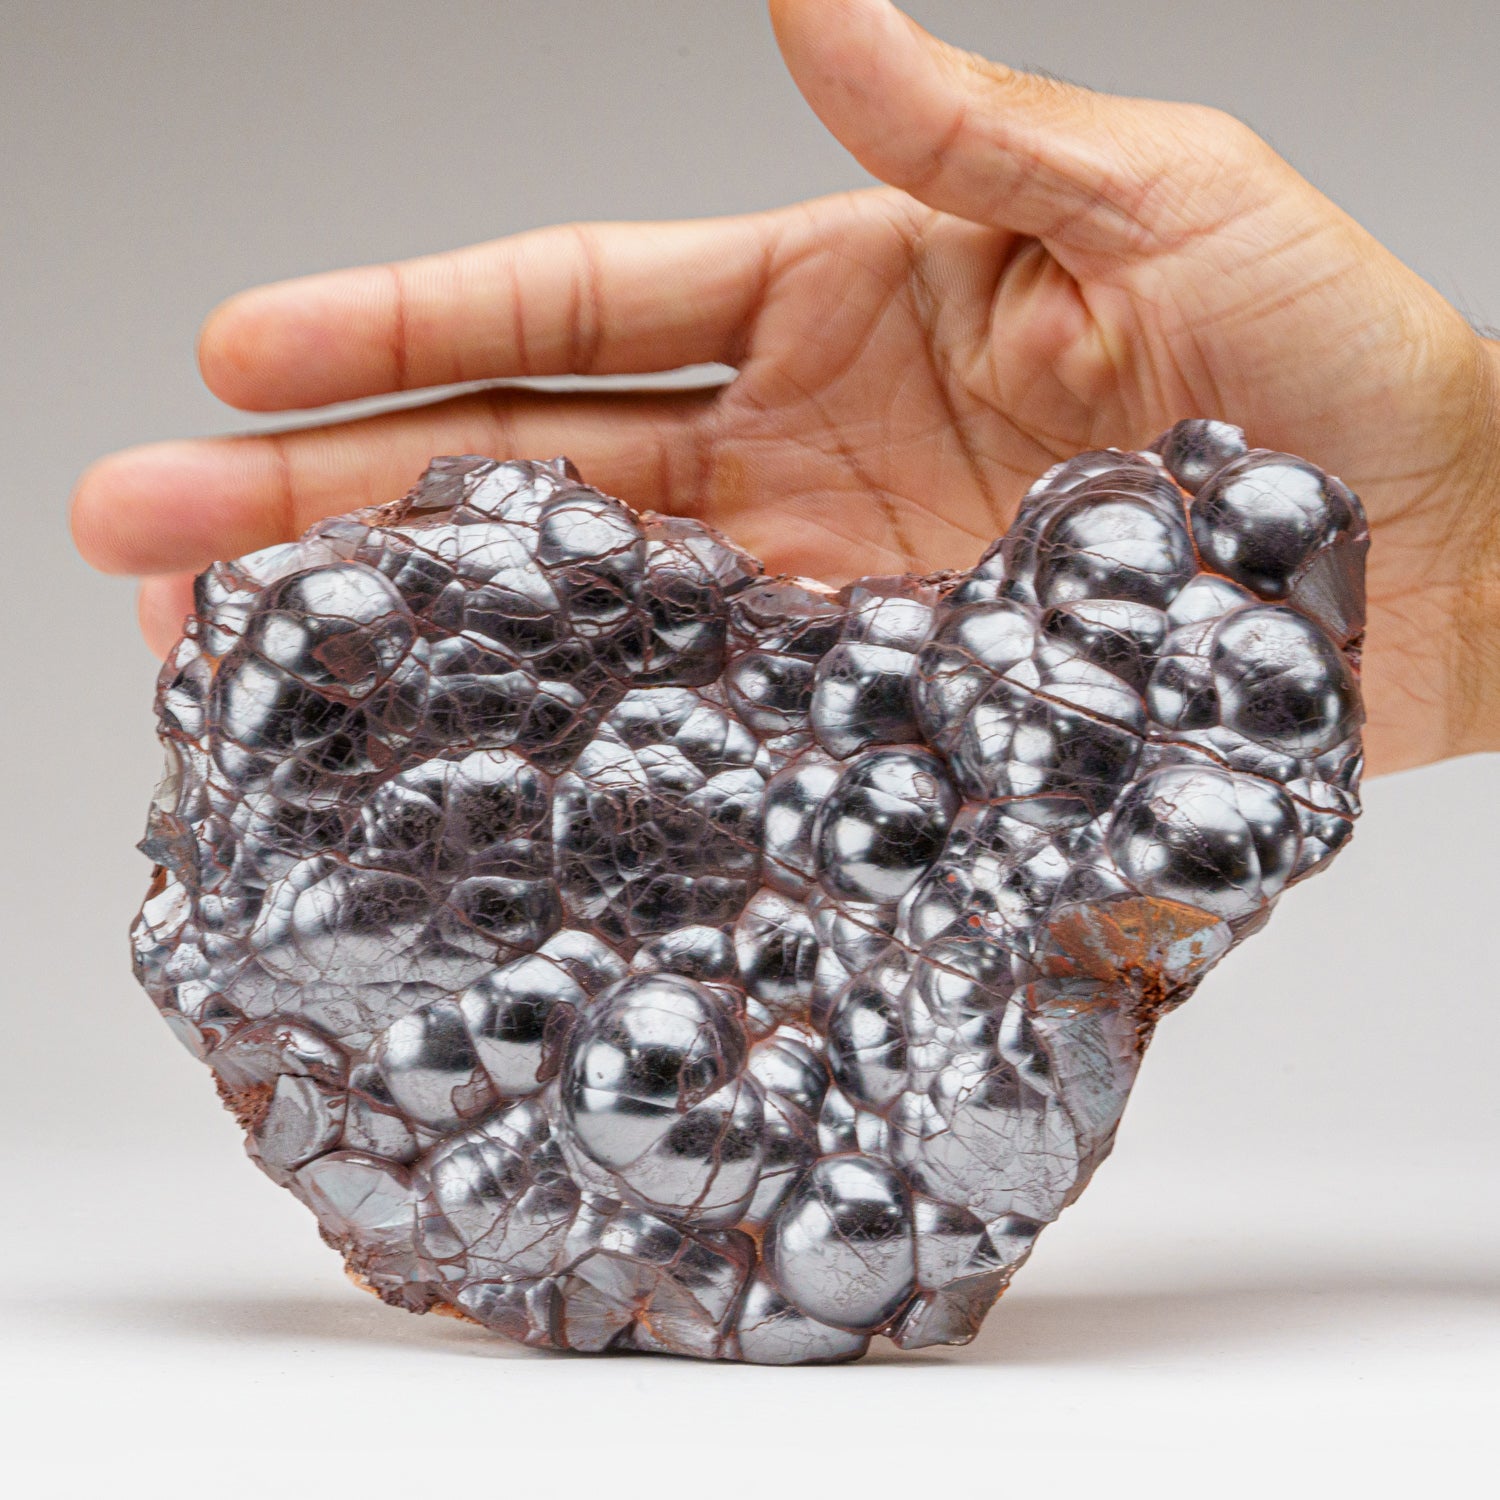 Botryoidal Hematite from Irhoud Mine, Youssoufia Province, Morocco